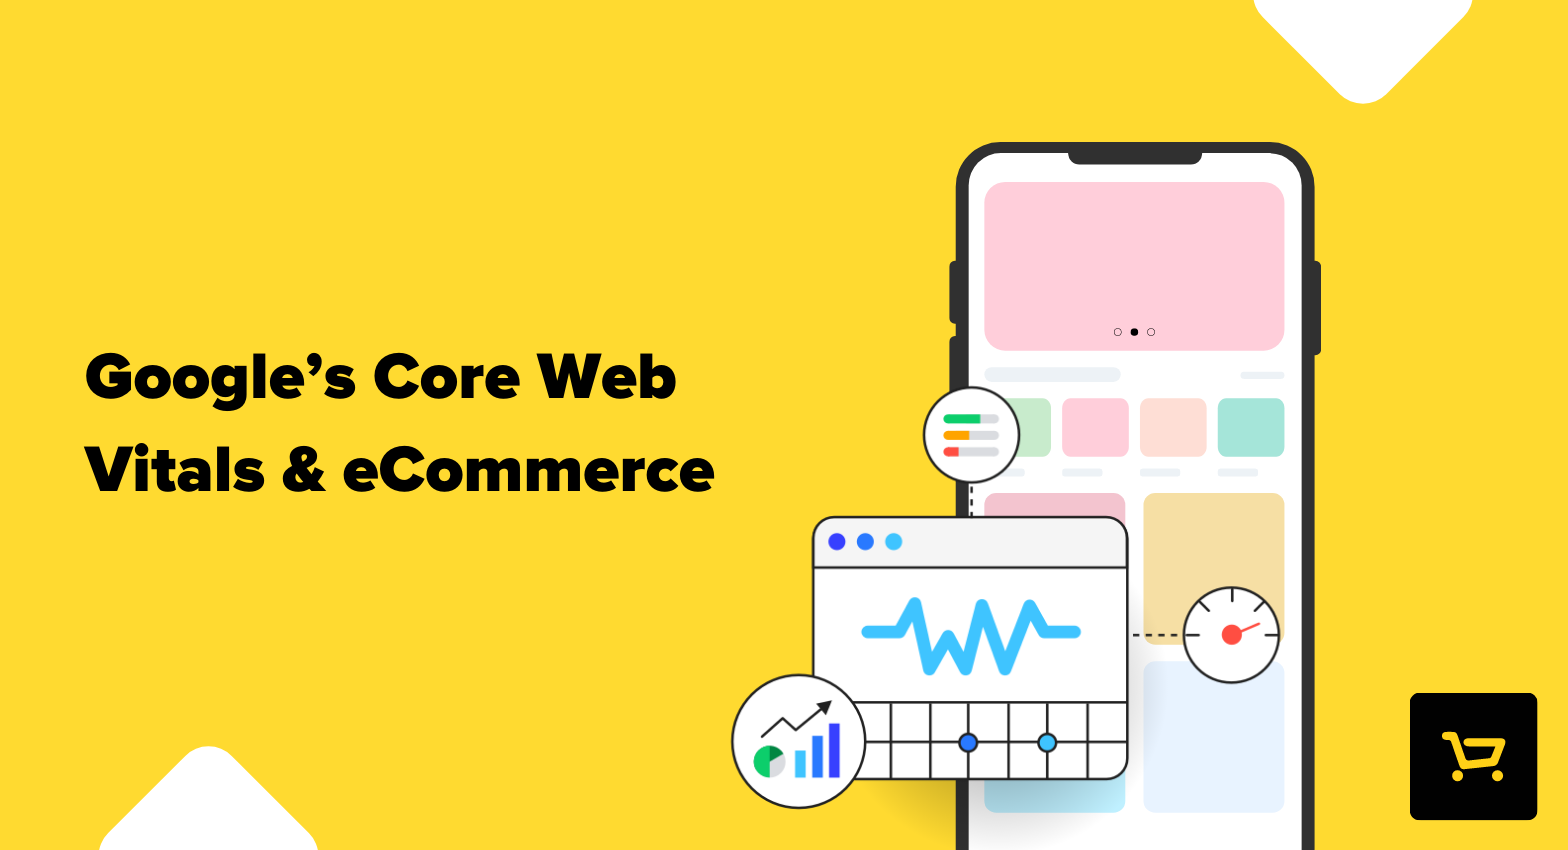 Google’s Core Web Vitals and eCommerce